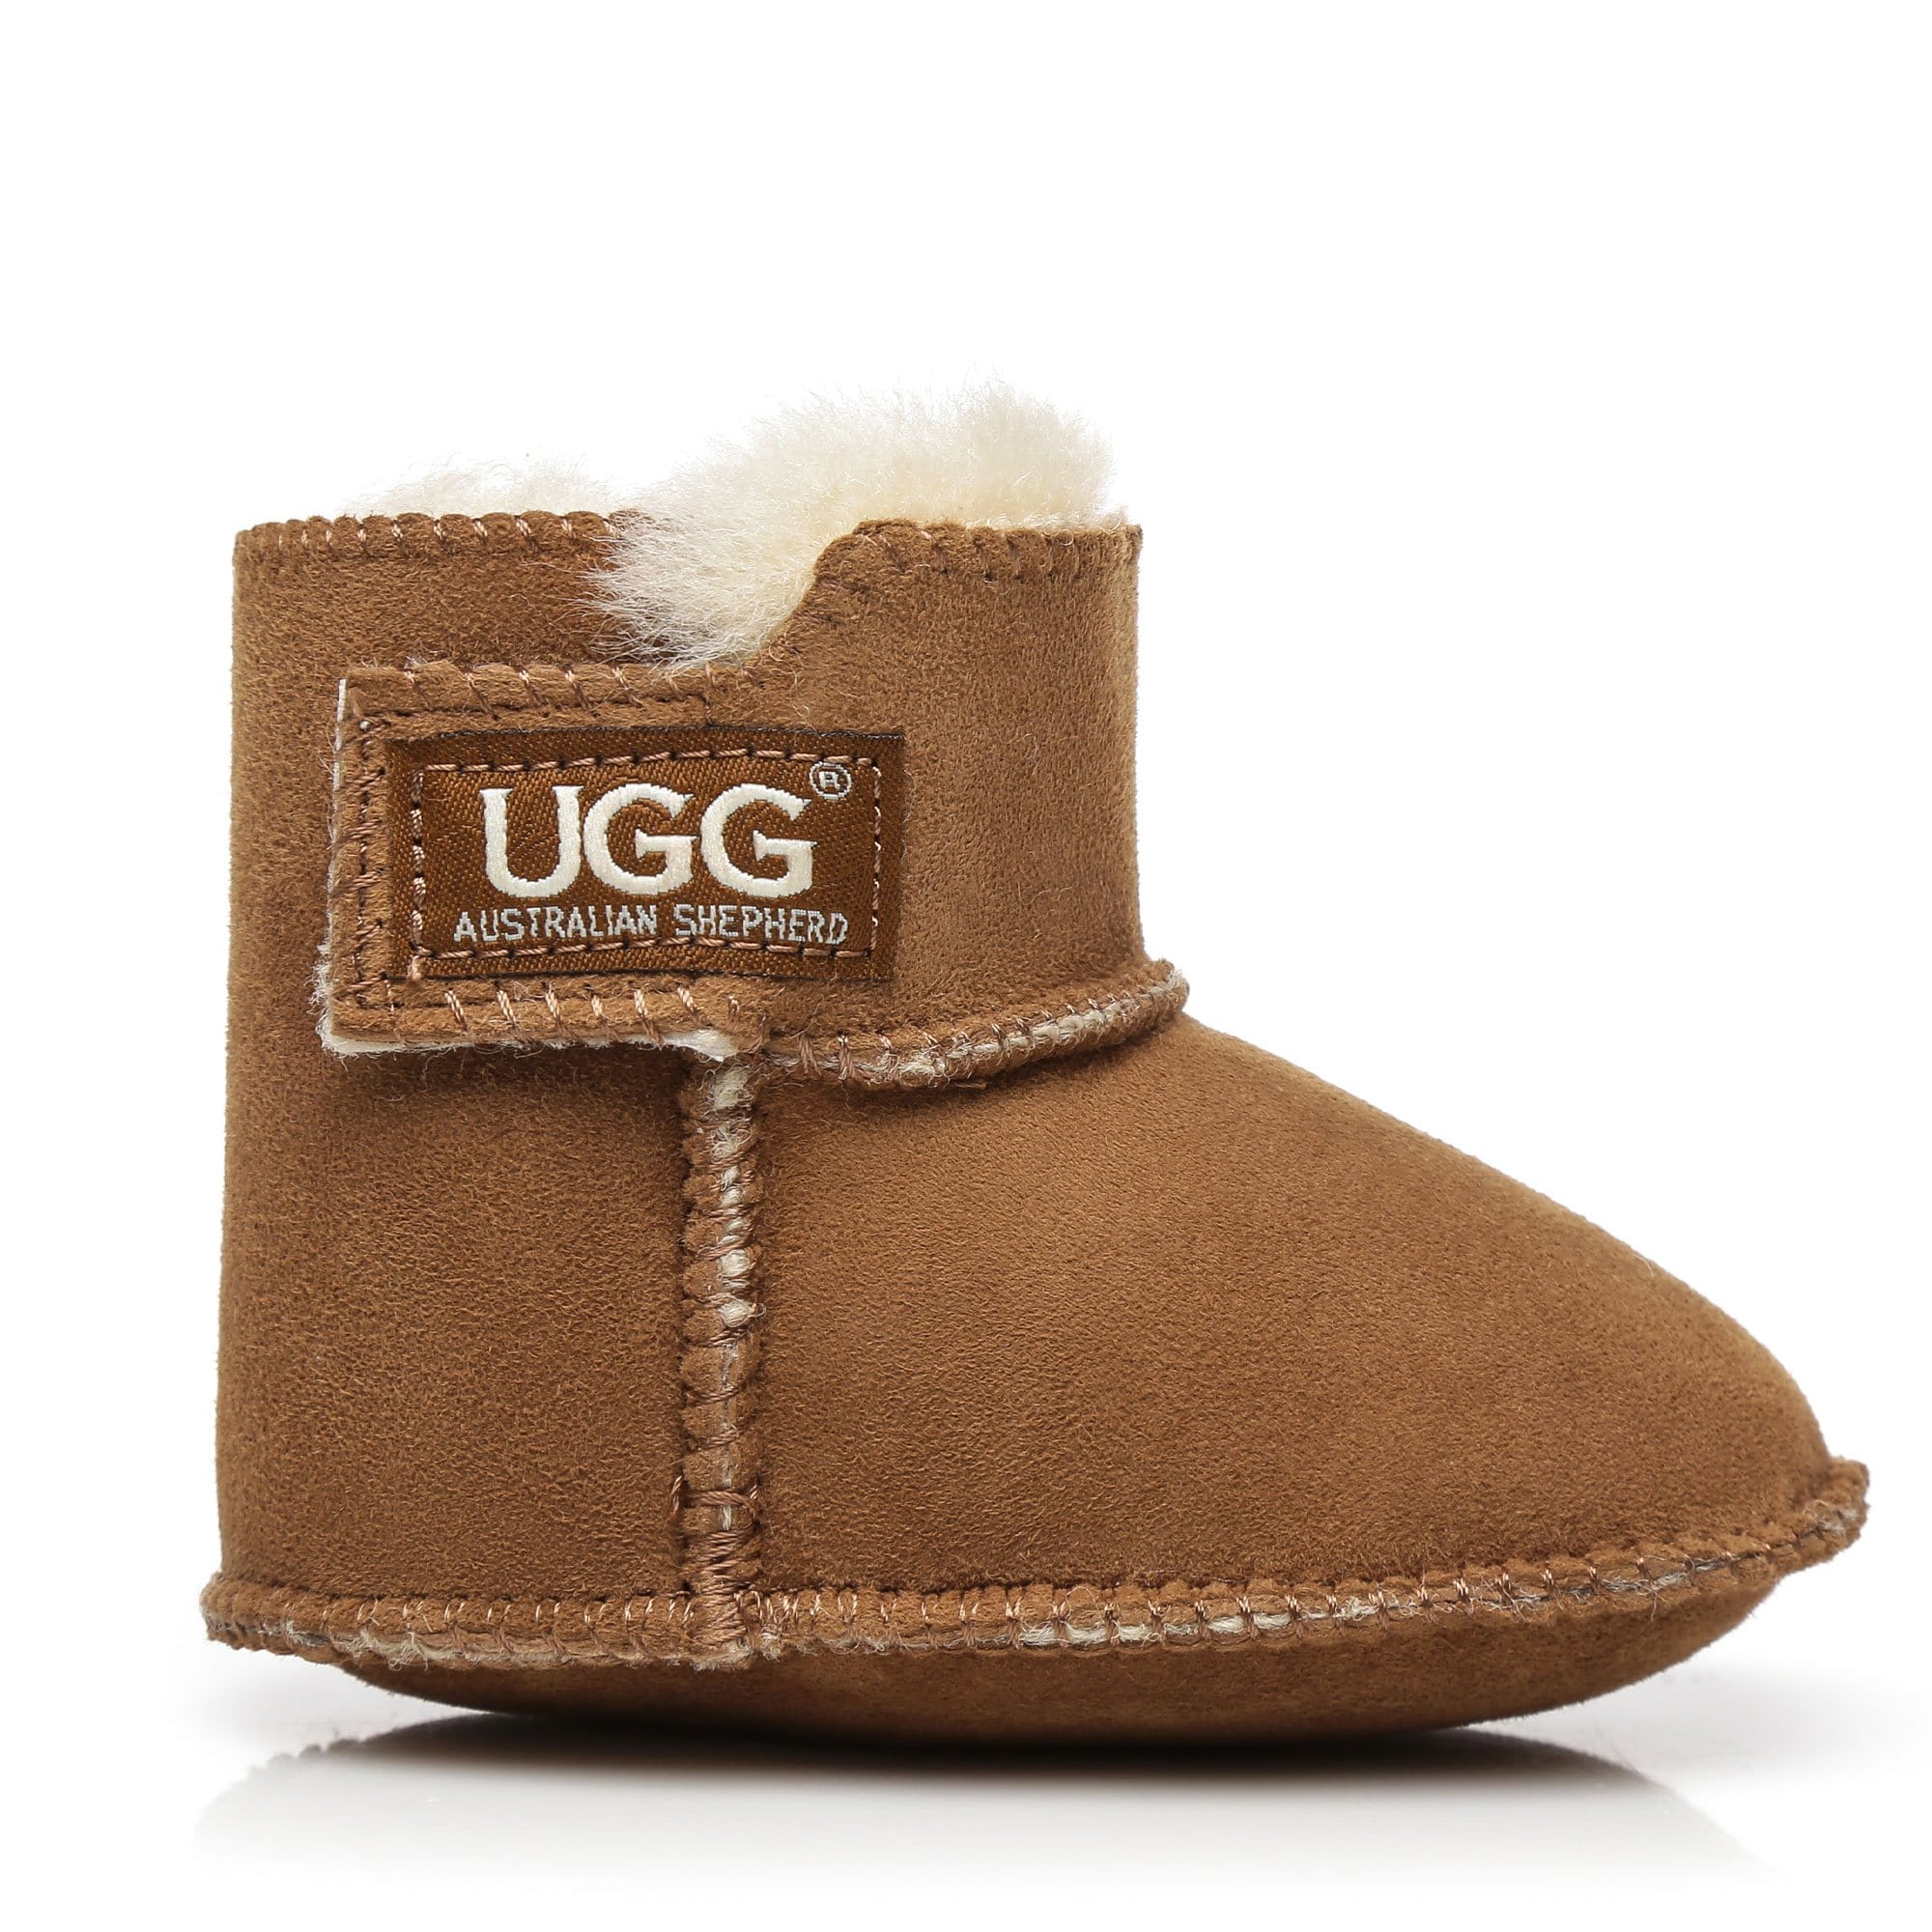 Ugg Boots - UGG Baby Ellie Boots - Original UGG Australia Classic